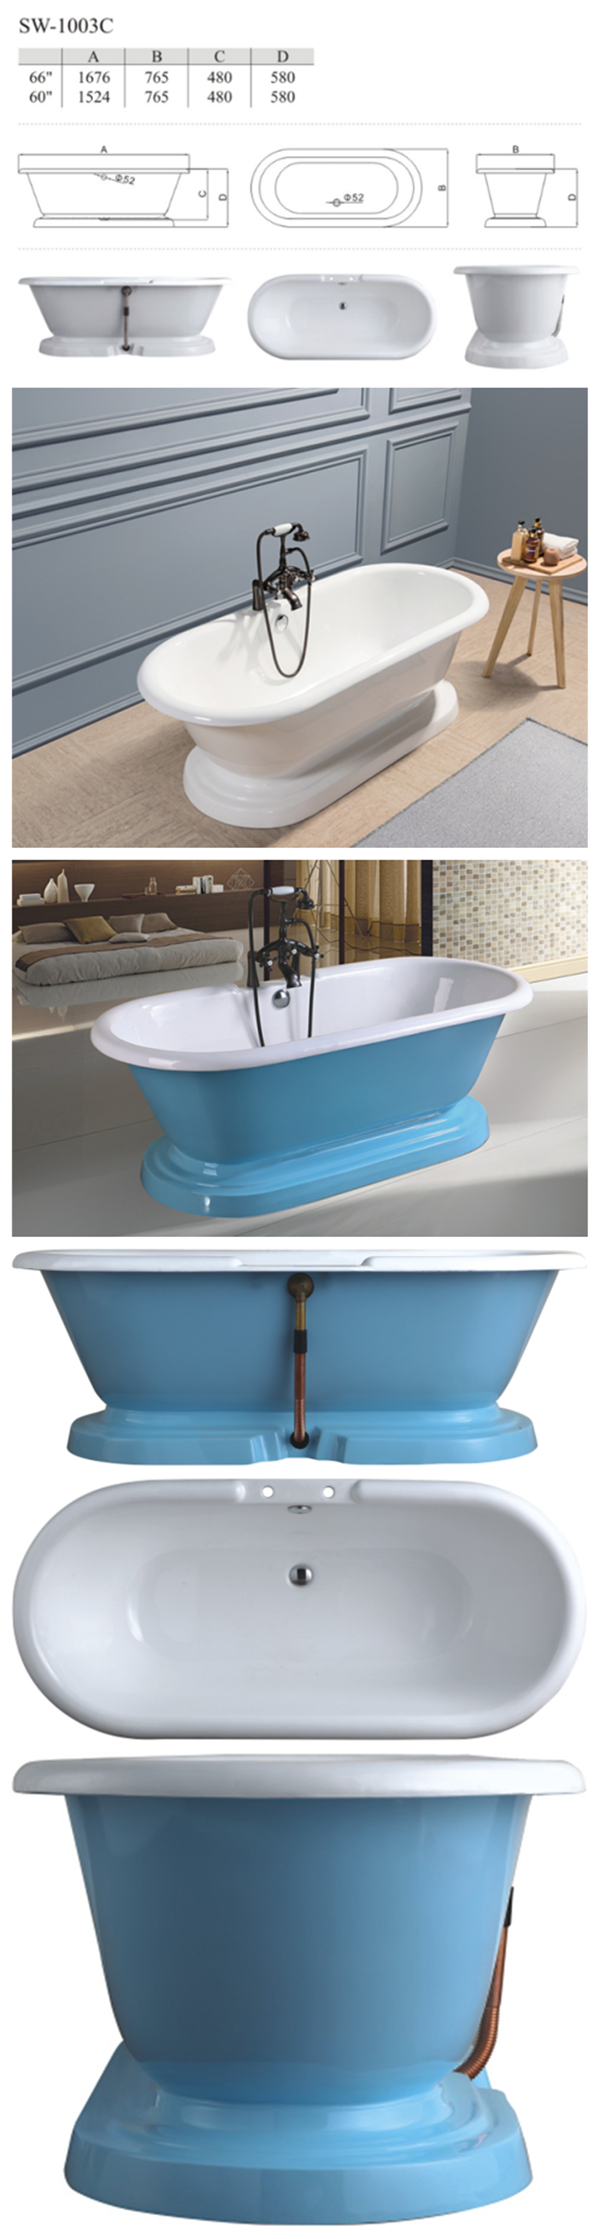 sky blue freestanding stone copper enamel bathtub